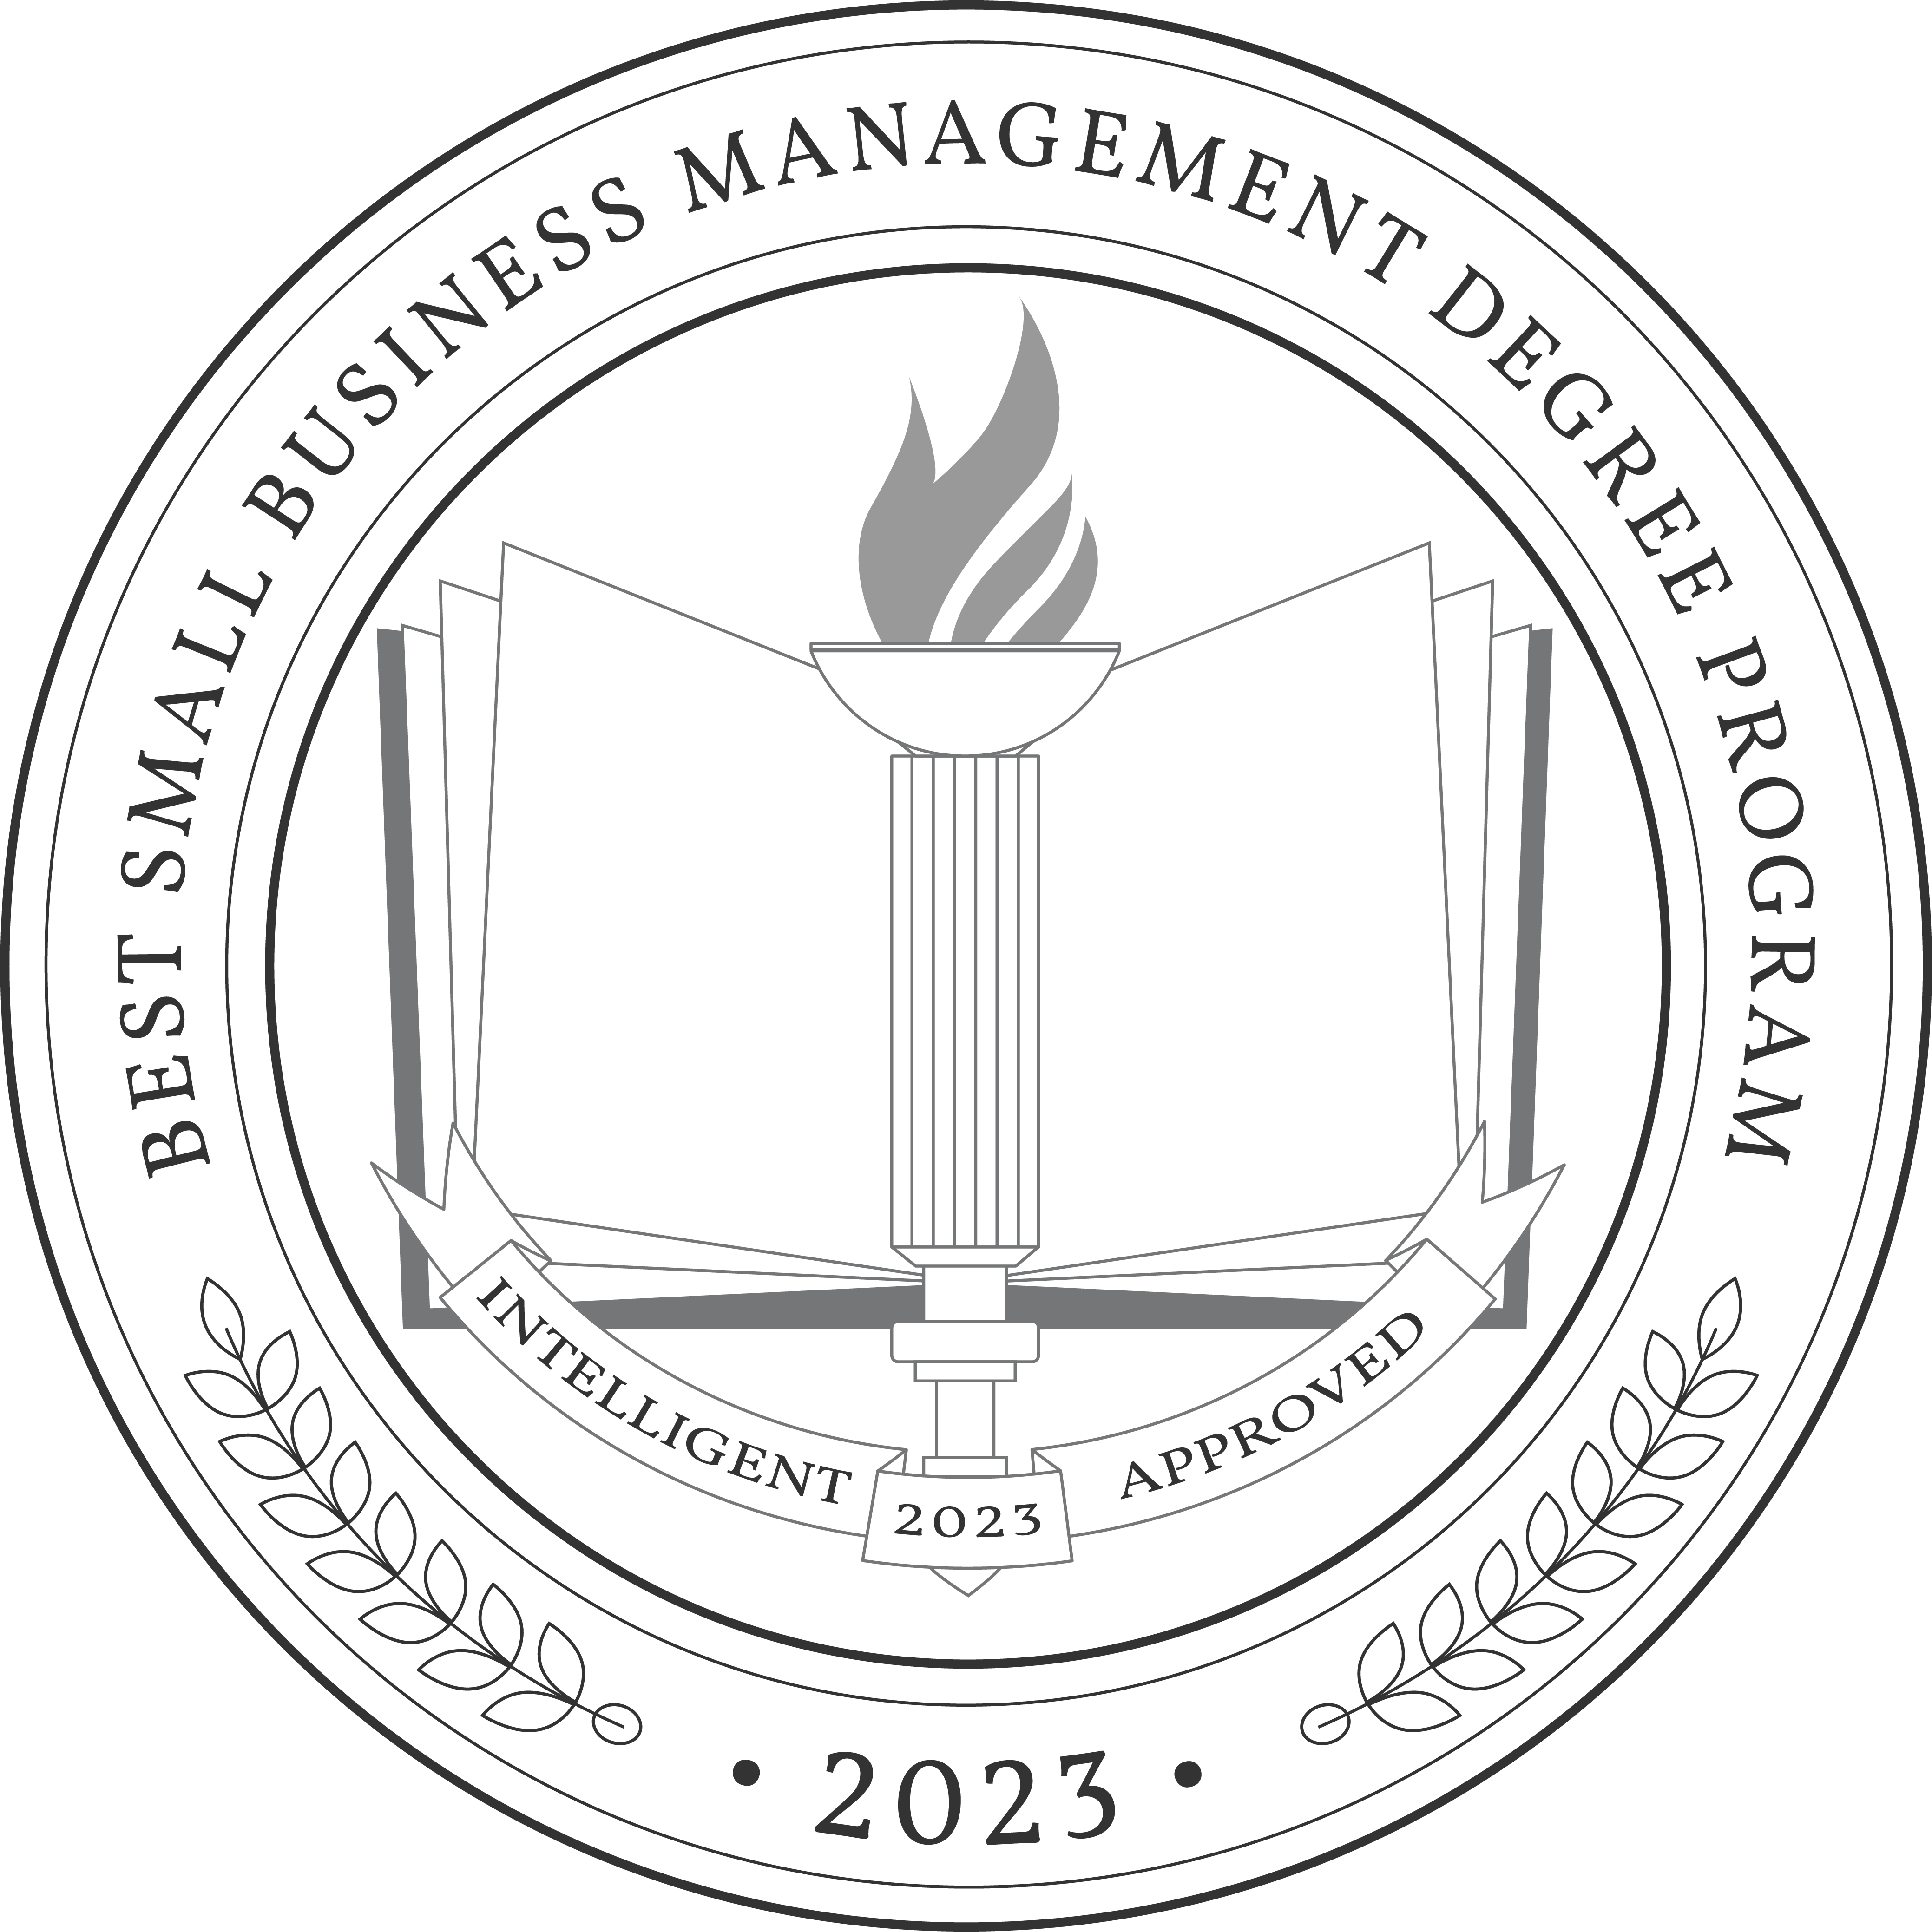 Best Small Business Management Degree Program 2023